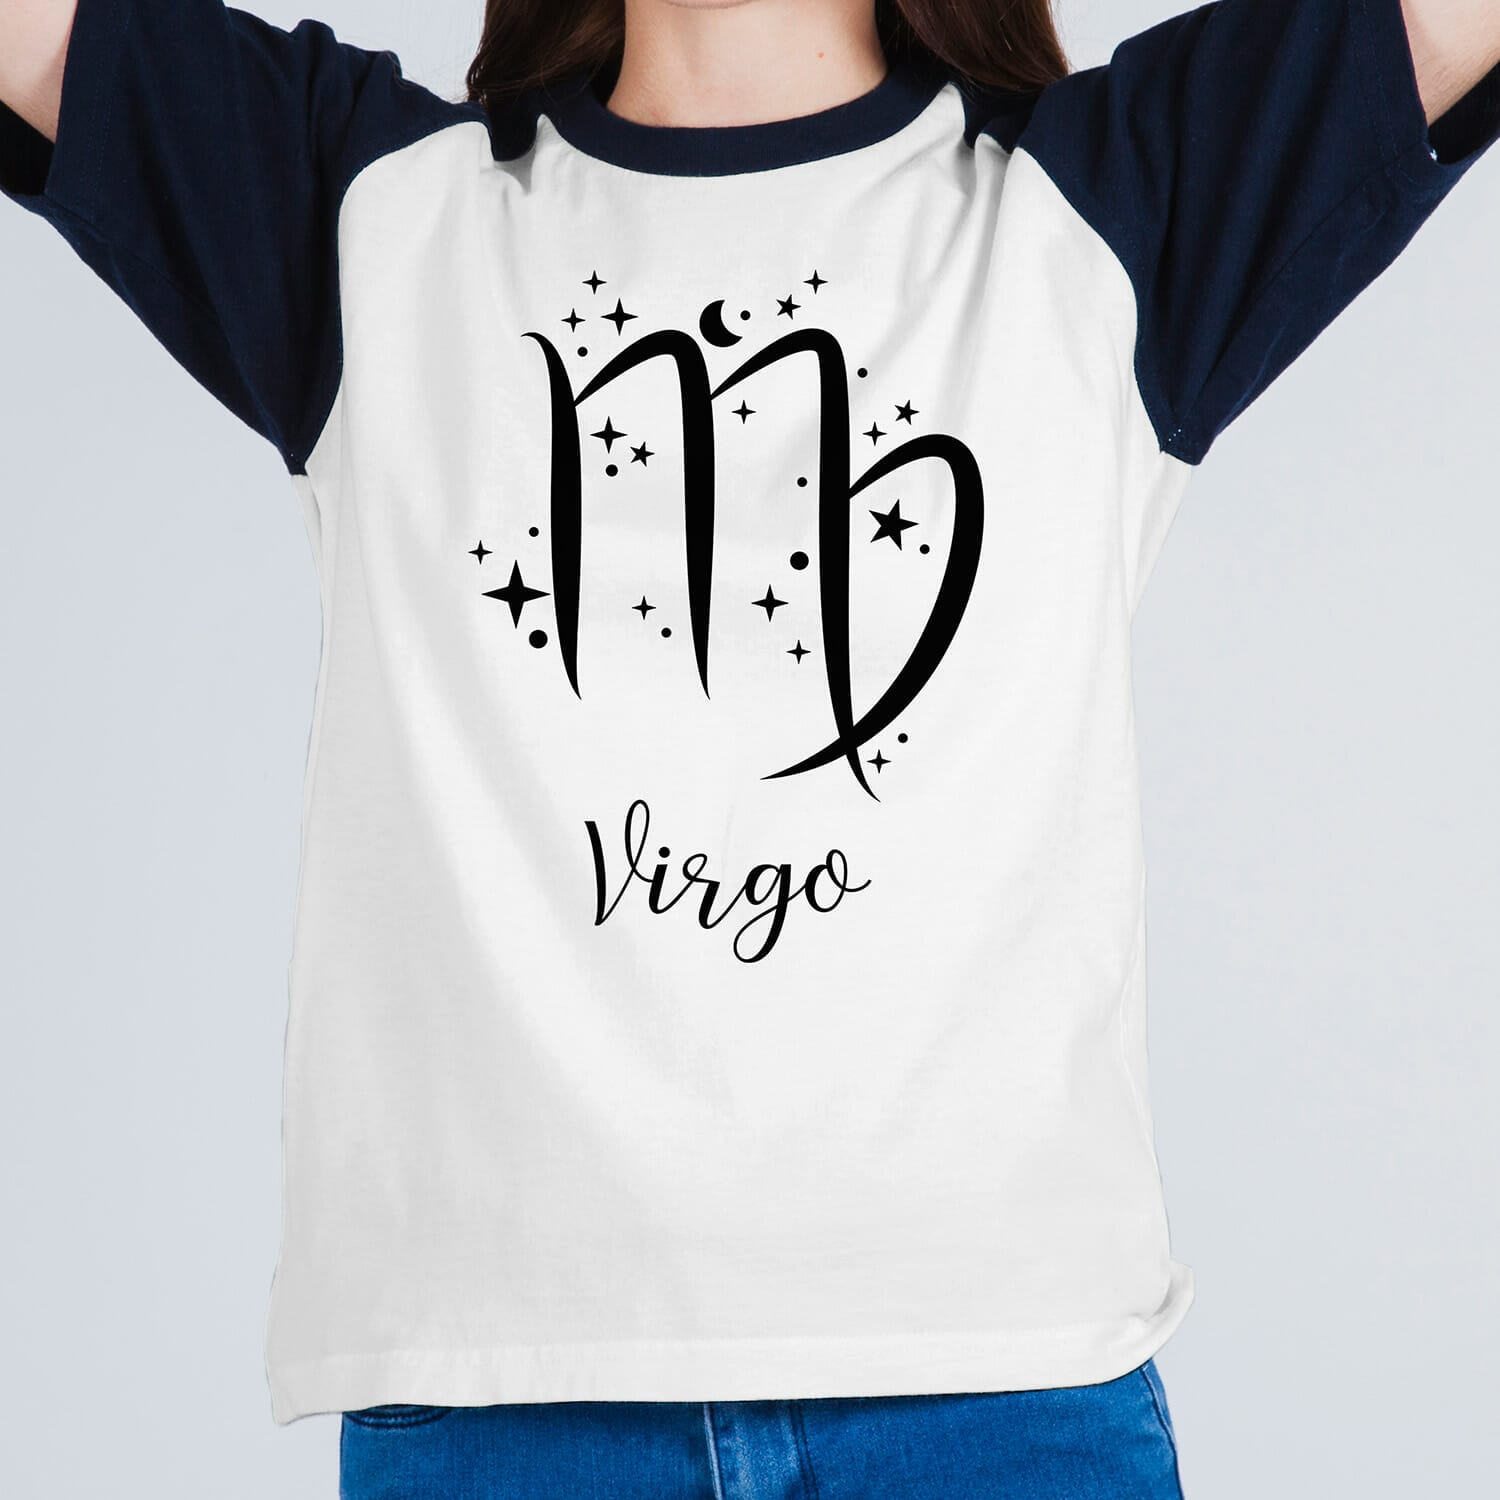 Virgo Horoscope tshirt design